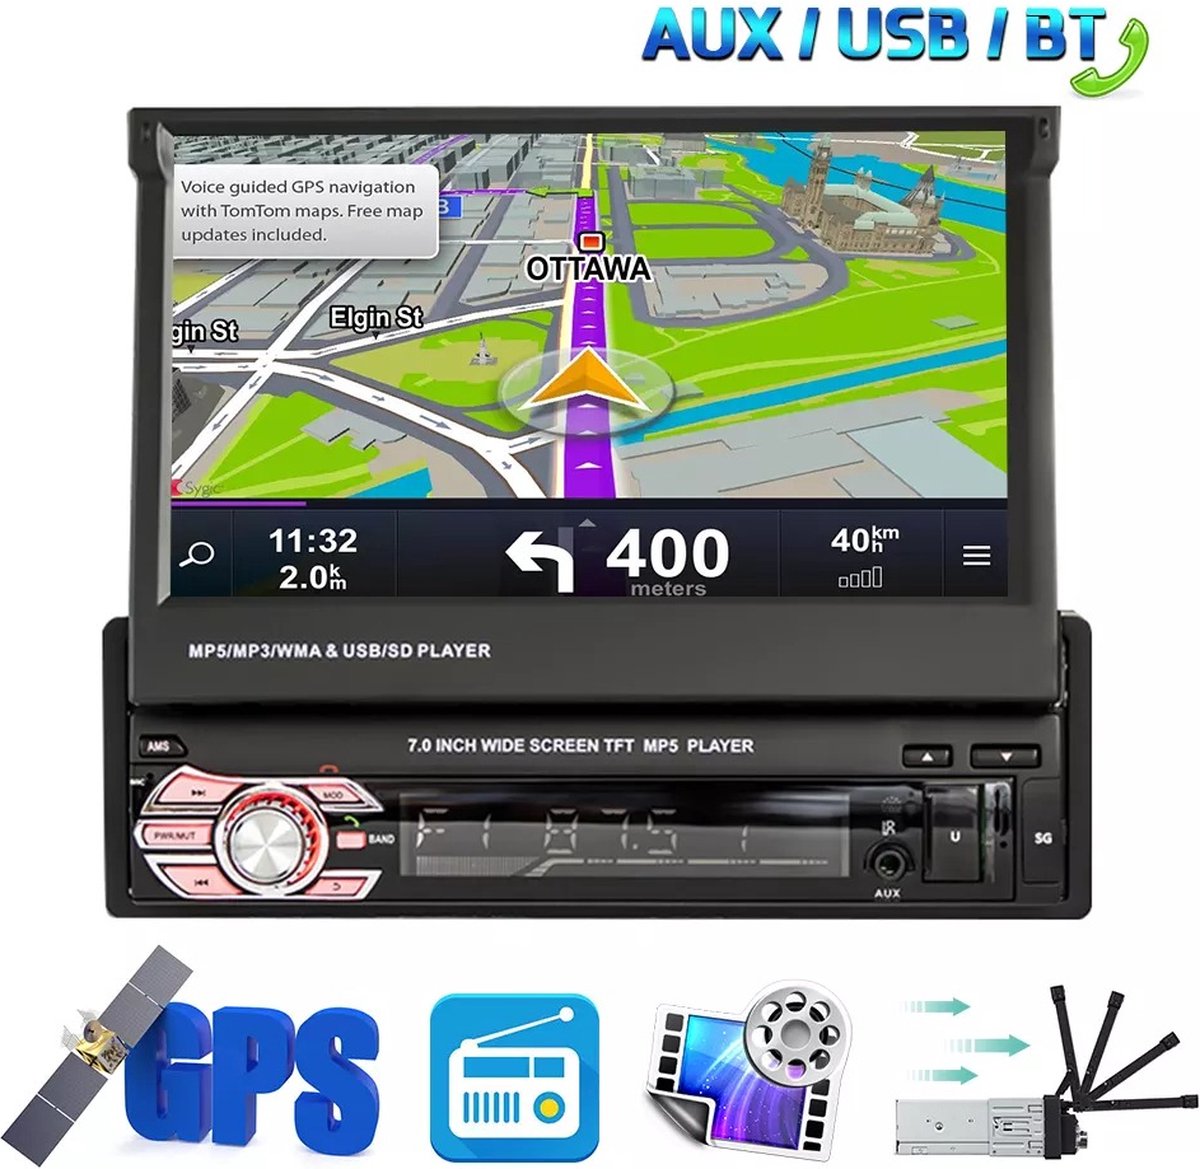 Autoradio Bluetooth avec Écran Rabattable - 1 DIN - DAB+ et FM  (RMD579DAB-BT)